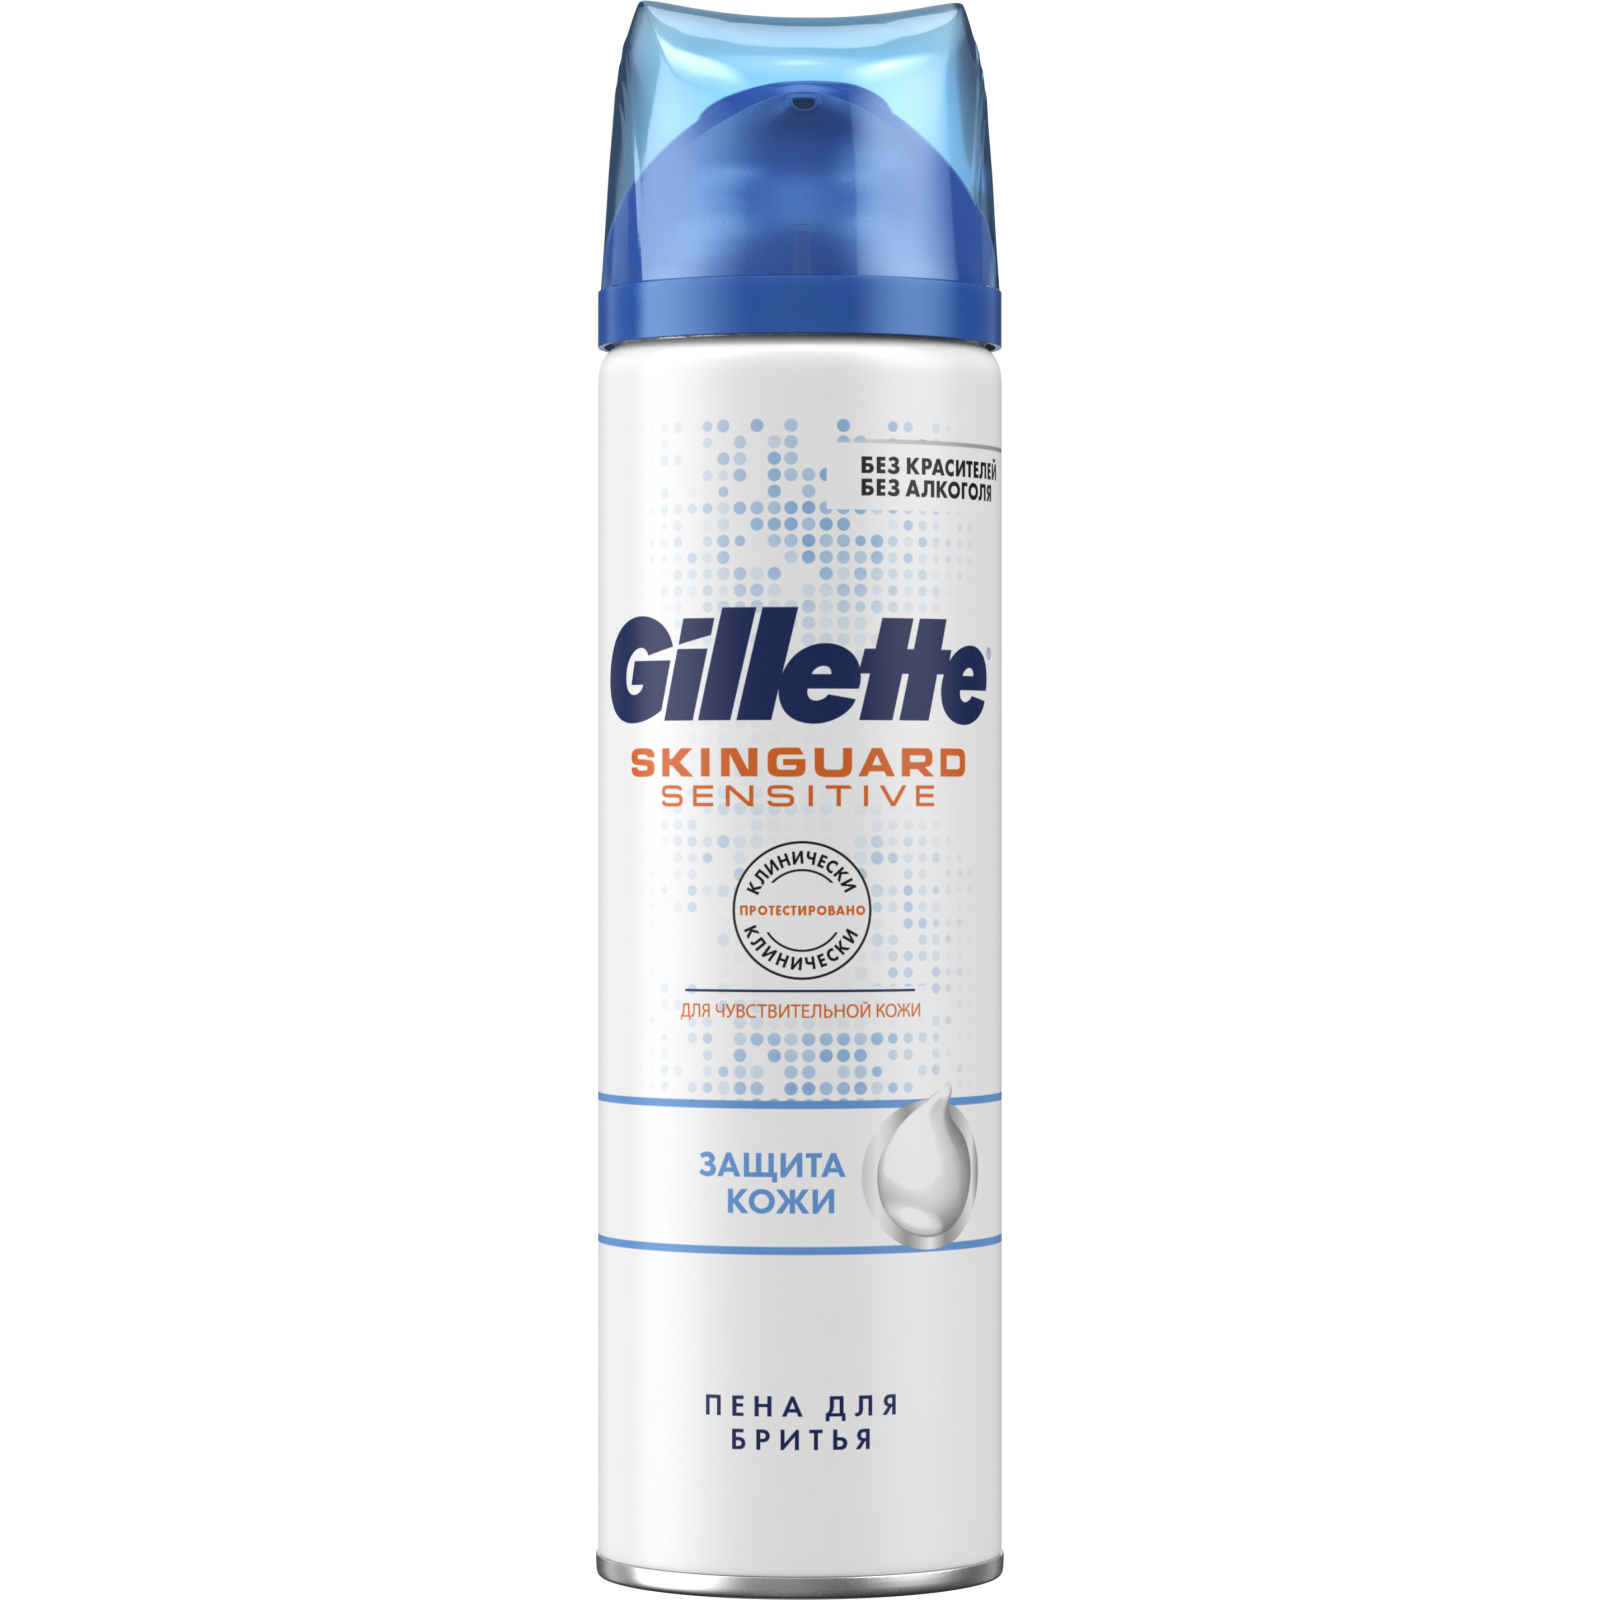 Пена для бритья Gillette SKINGUARD Sensitive, 250мл (7702018493944)